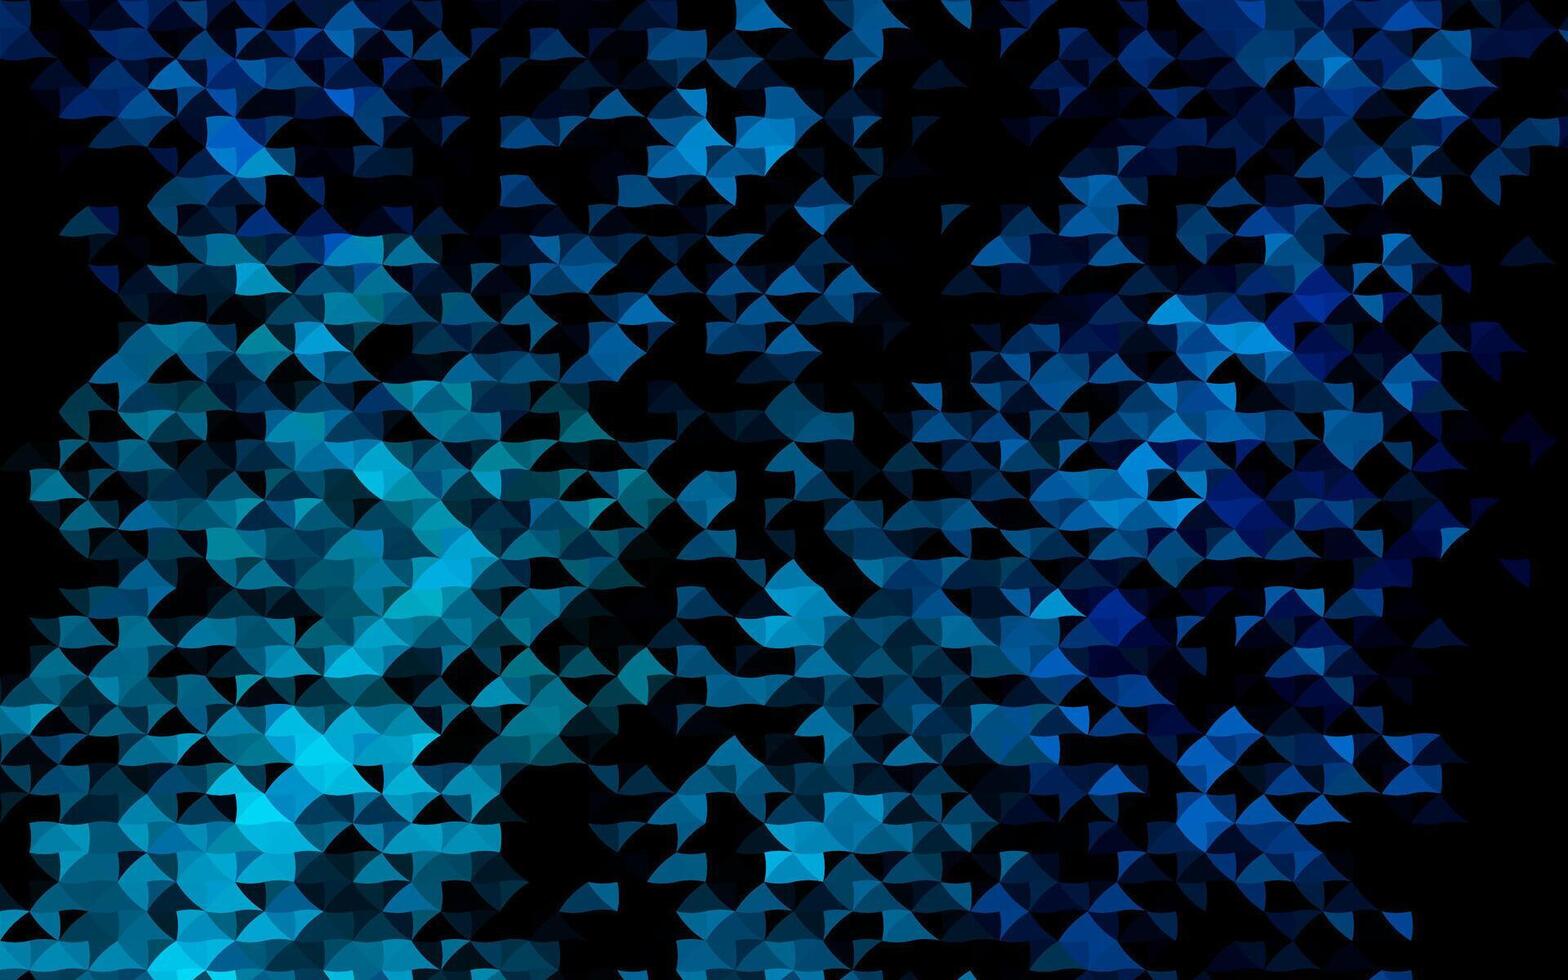 trama vettoriale blu scuro in stile triangolare.